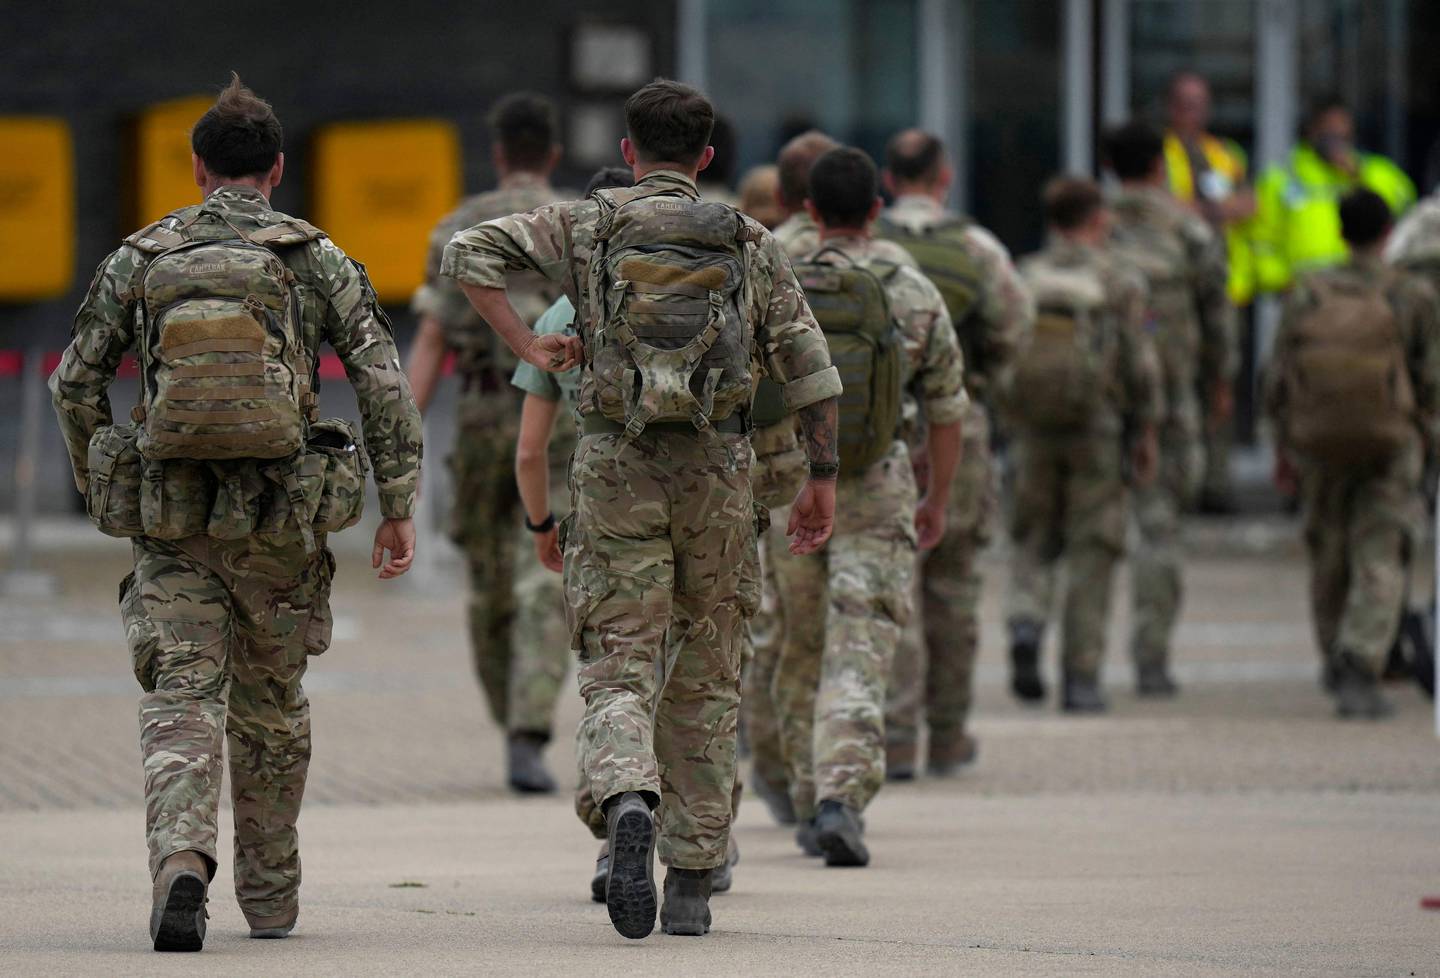 Members of the UK's 16 Air Assault Brigade disembark a flight at the UK's RAF Brize Norton. AFP 